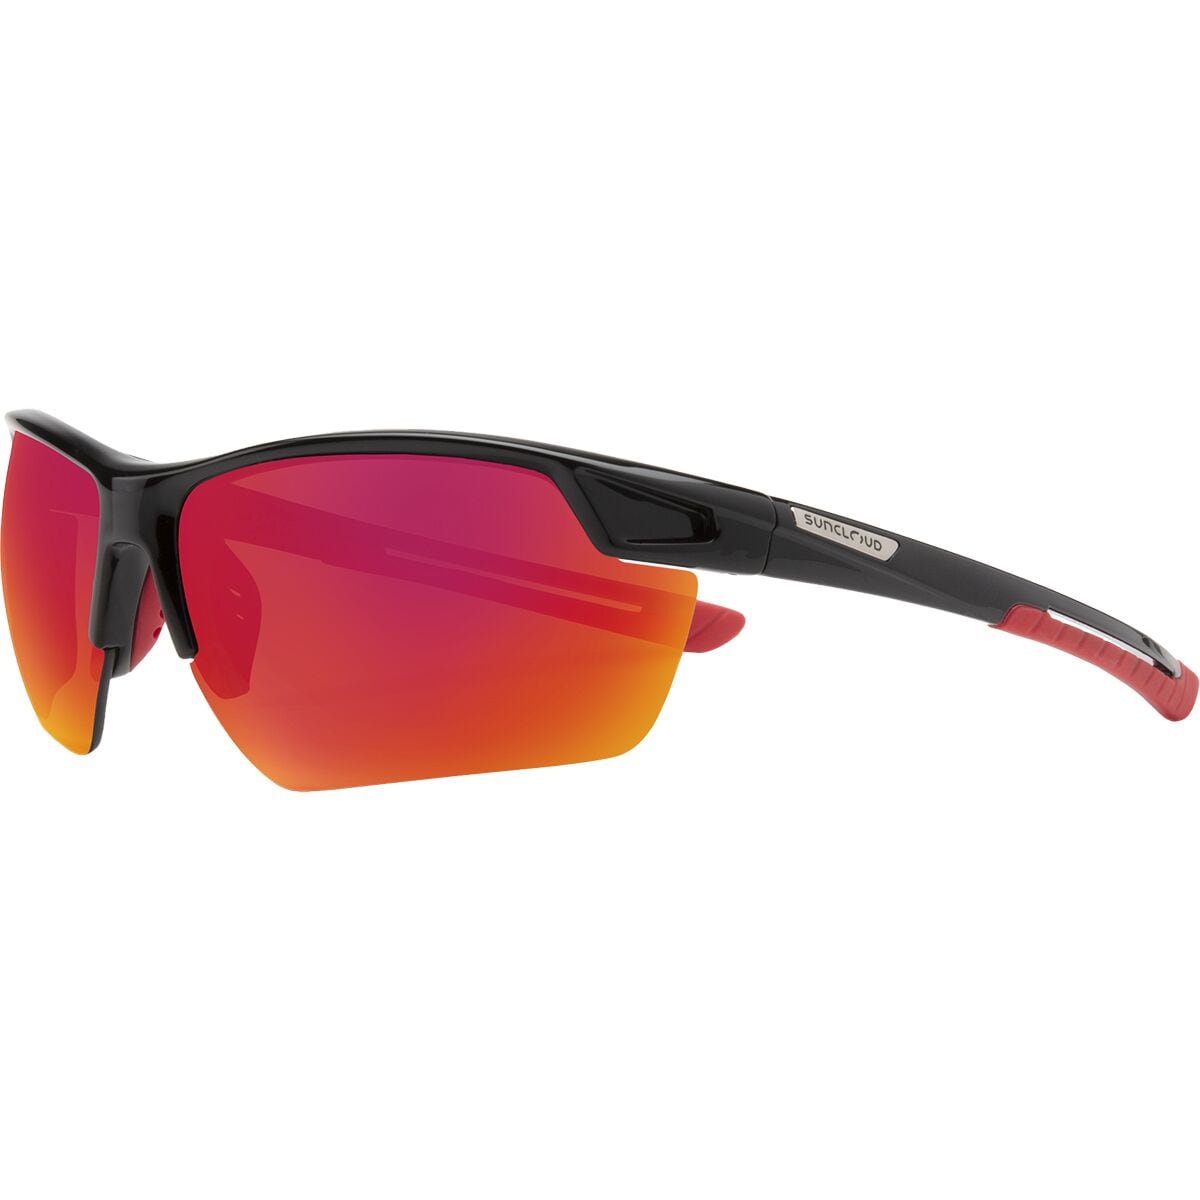 Поляризованные солнцезащитные очки contender Suncloud Polarized Optics, цвет black/polarized red mirror очки солнцезащитные stylemark polarized l1454a